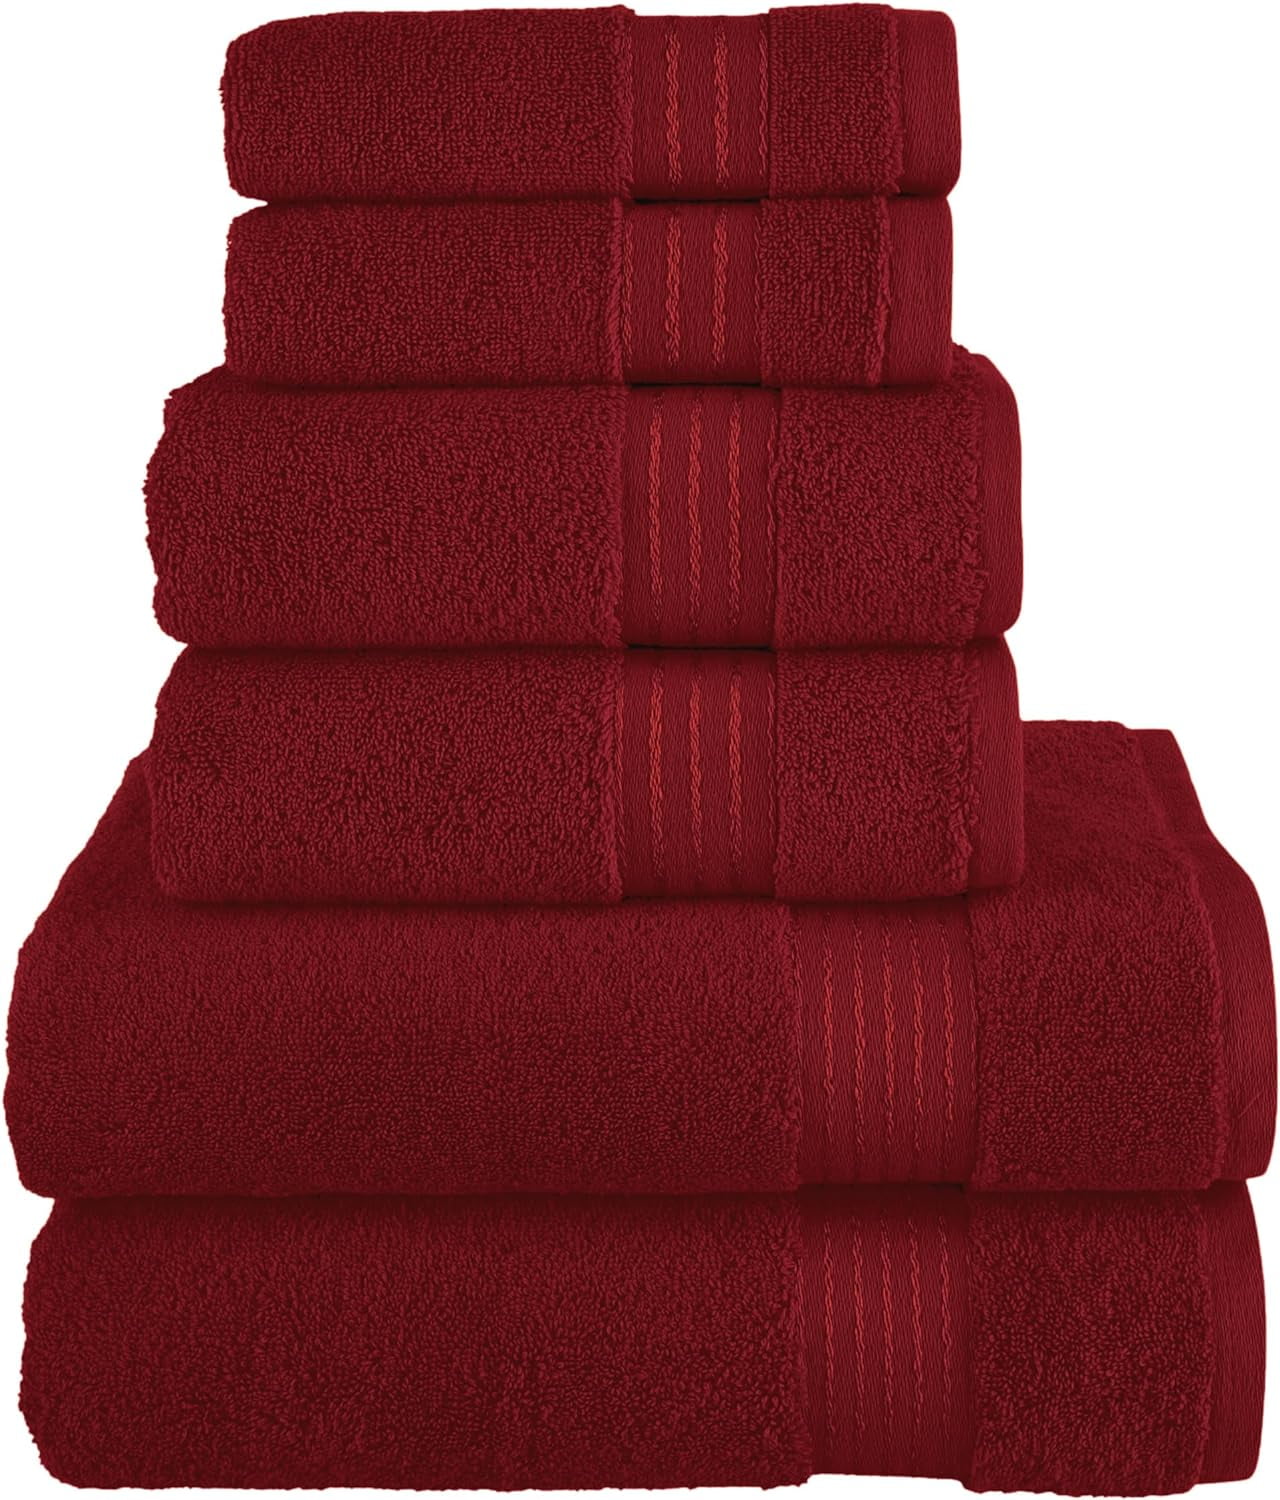  COZYART Luxury Red Bath Towels Set 3 Pcs, Cotton Hotel